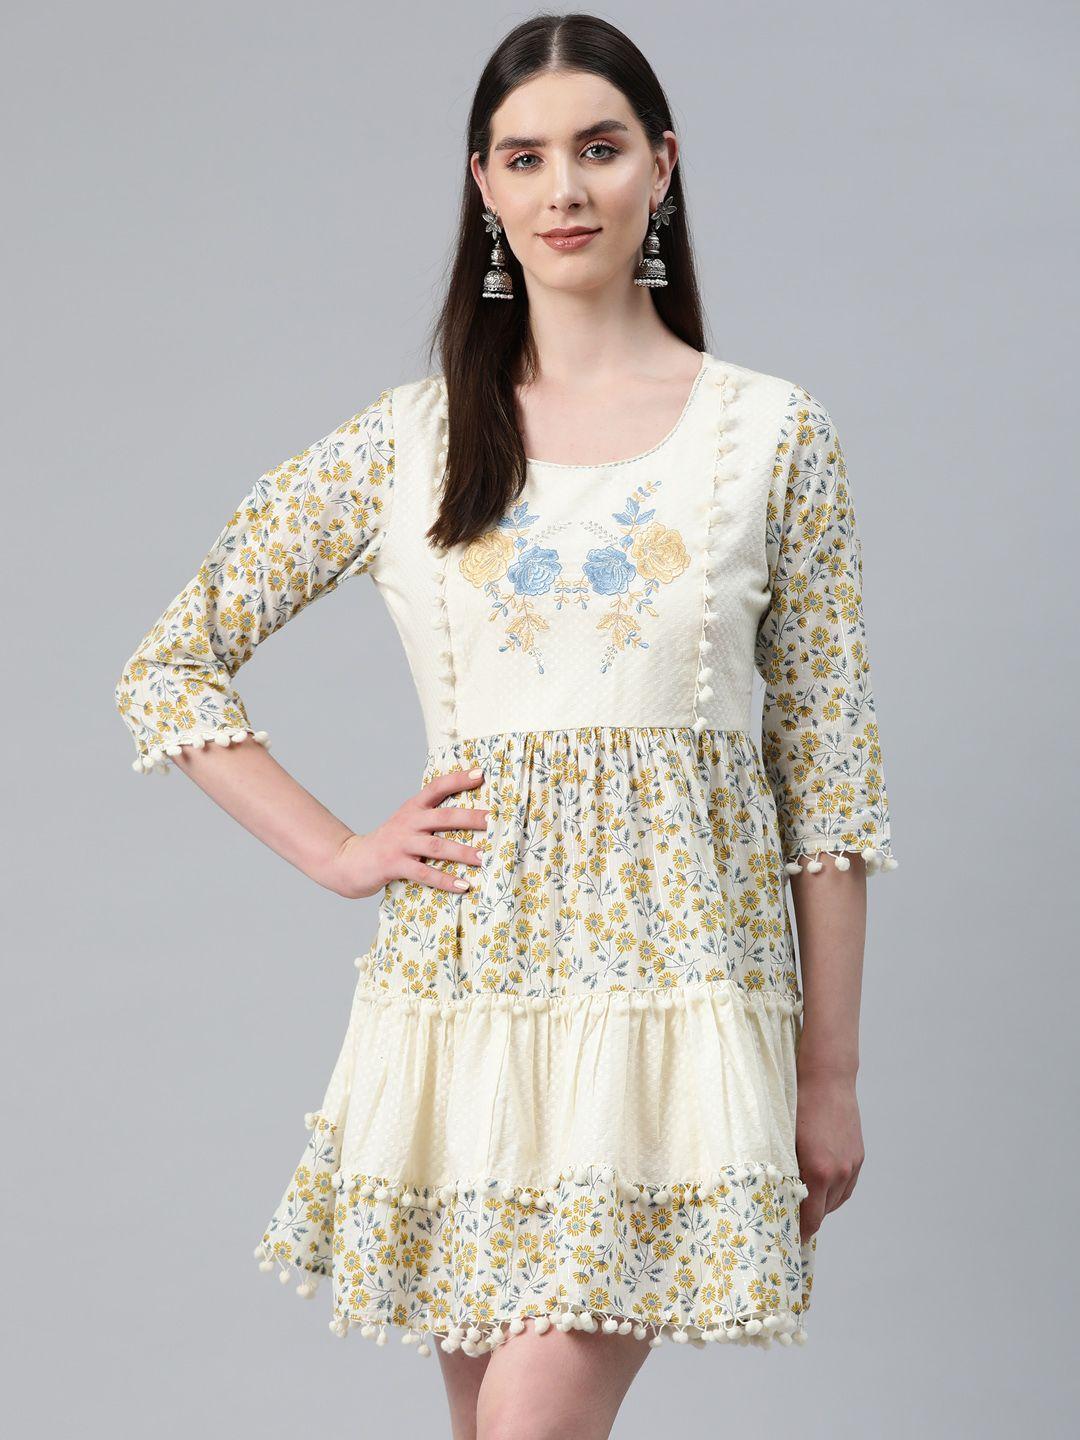 readiprint fashions floral print with pom-pom detail a-line dress